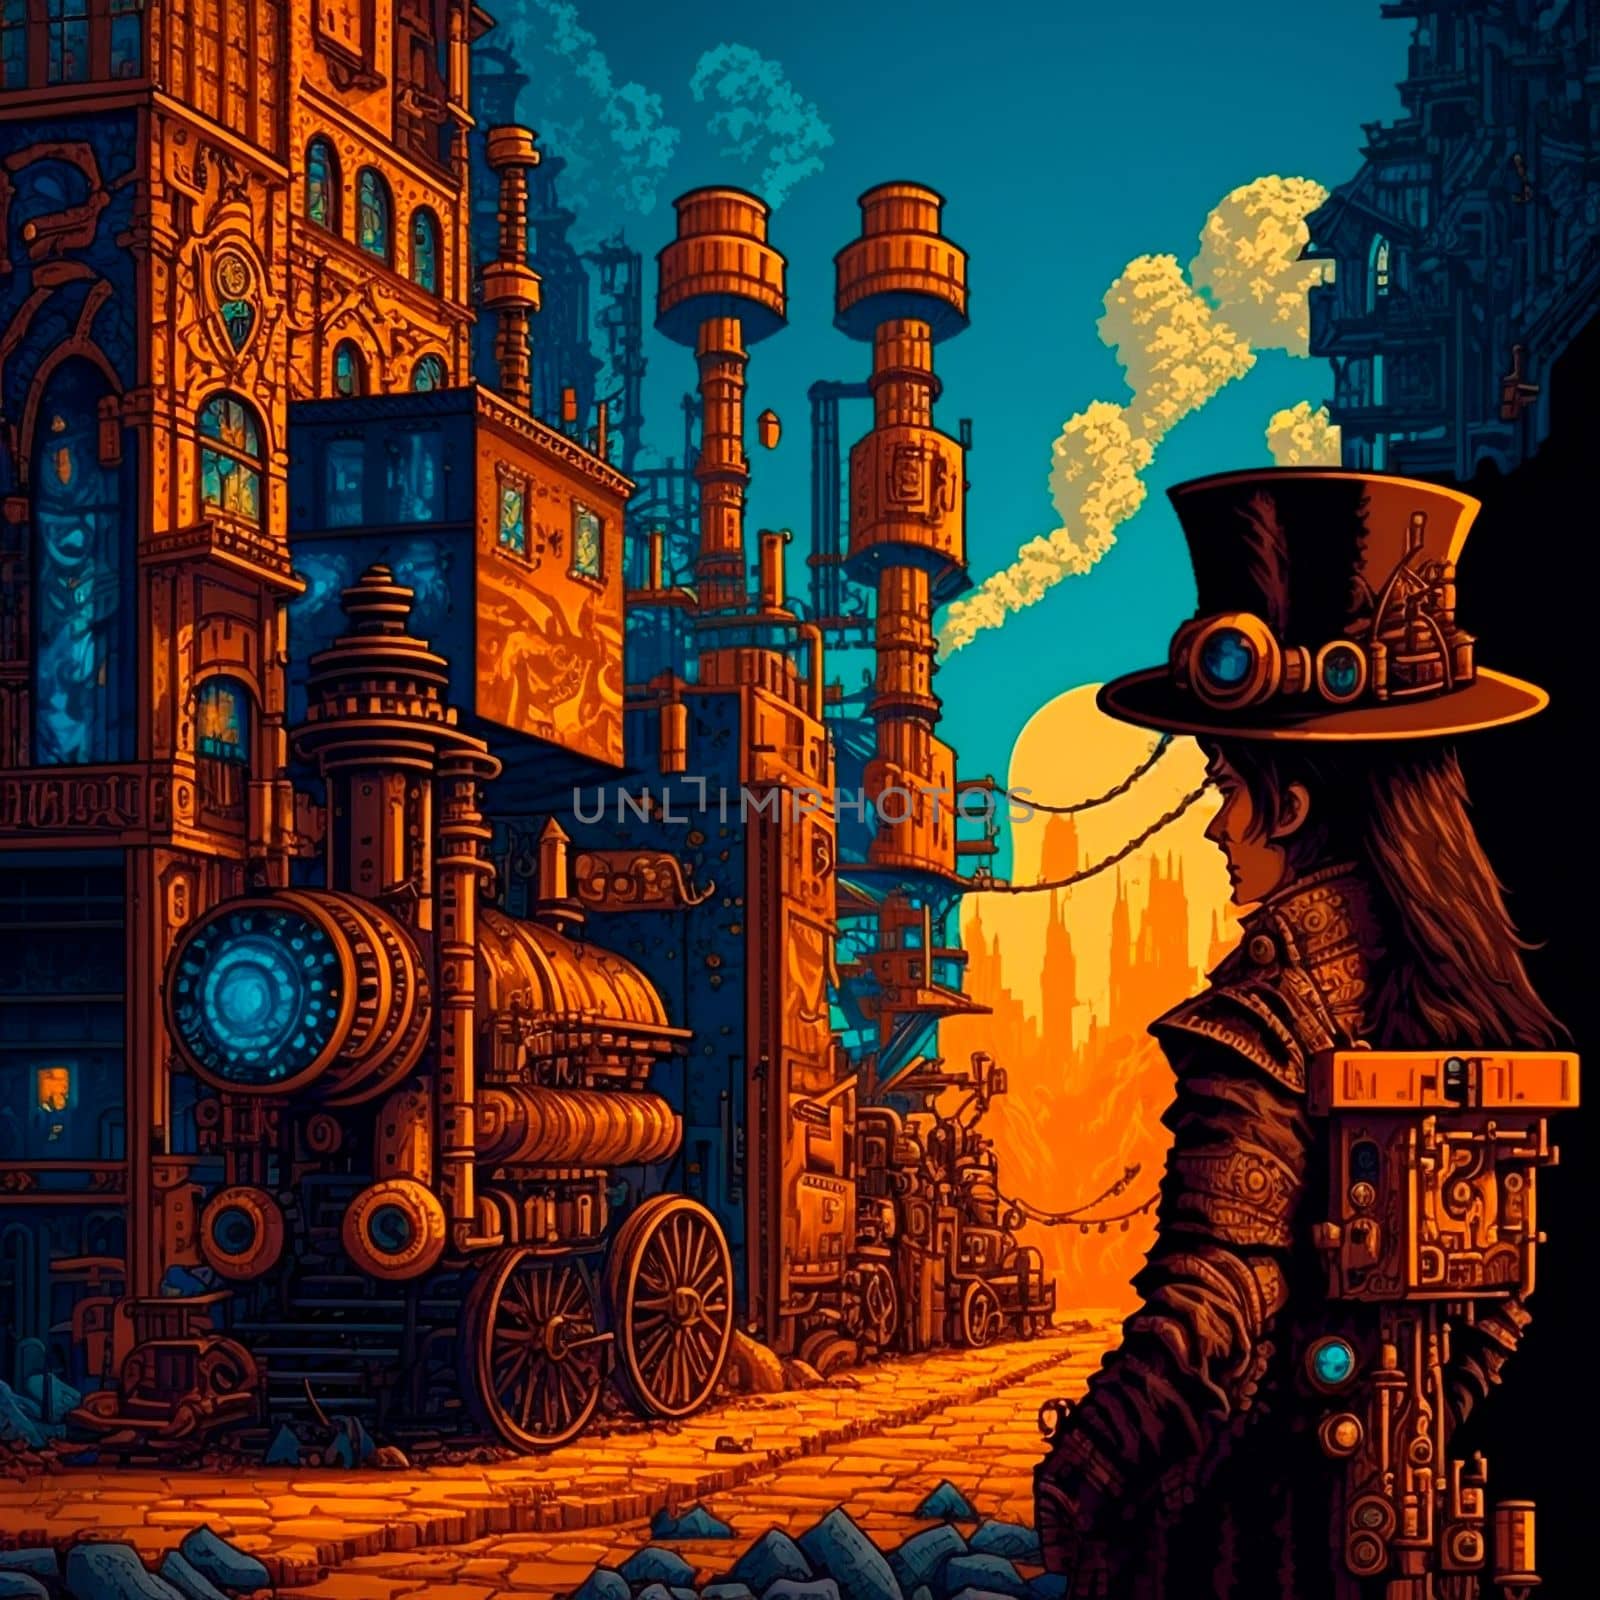 Cartoon image of a steampunk city stylized as pixelart. High quality illustration